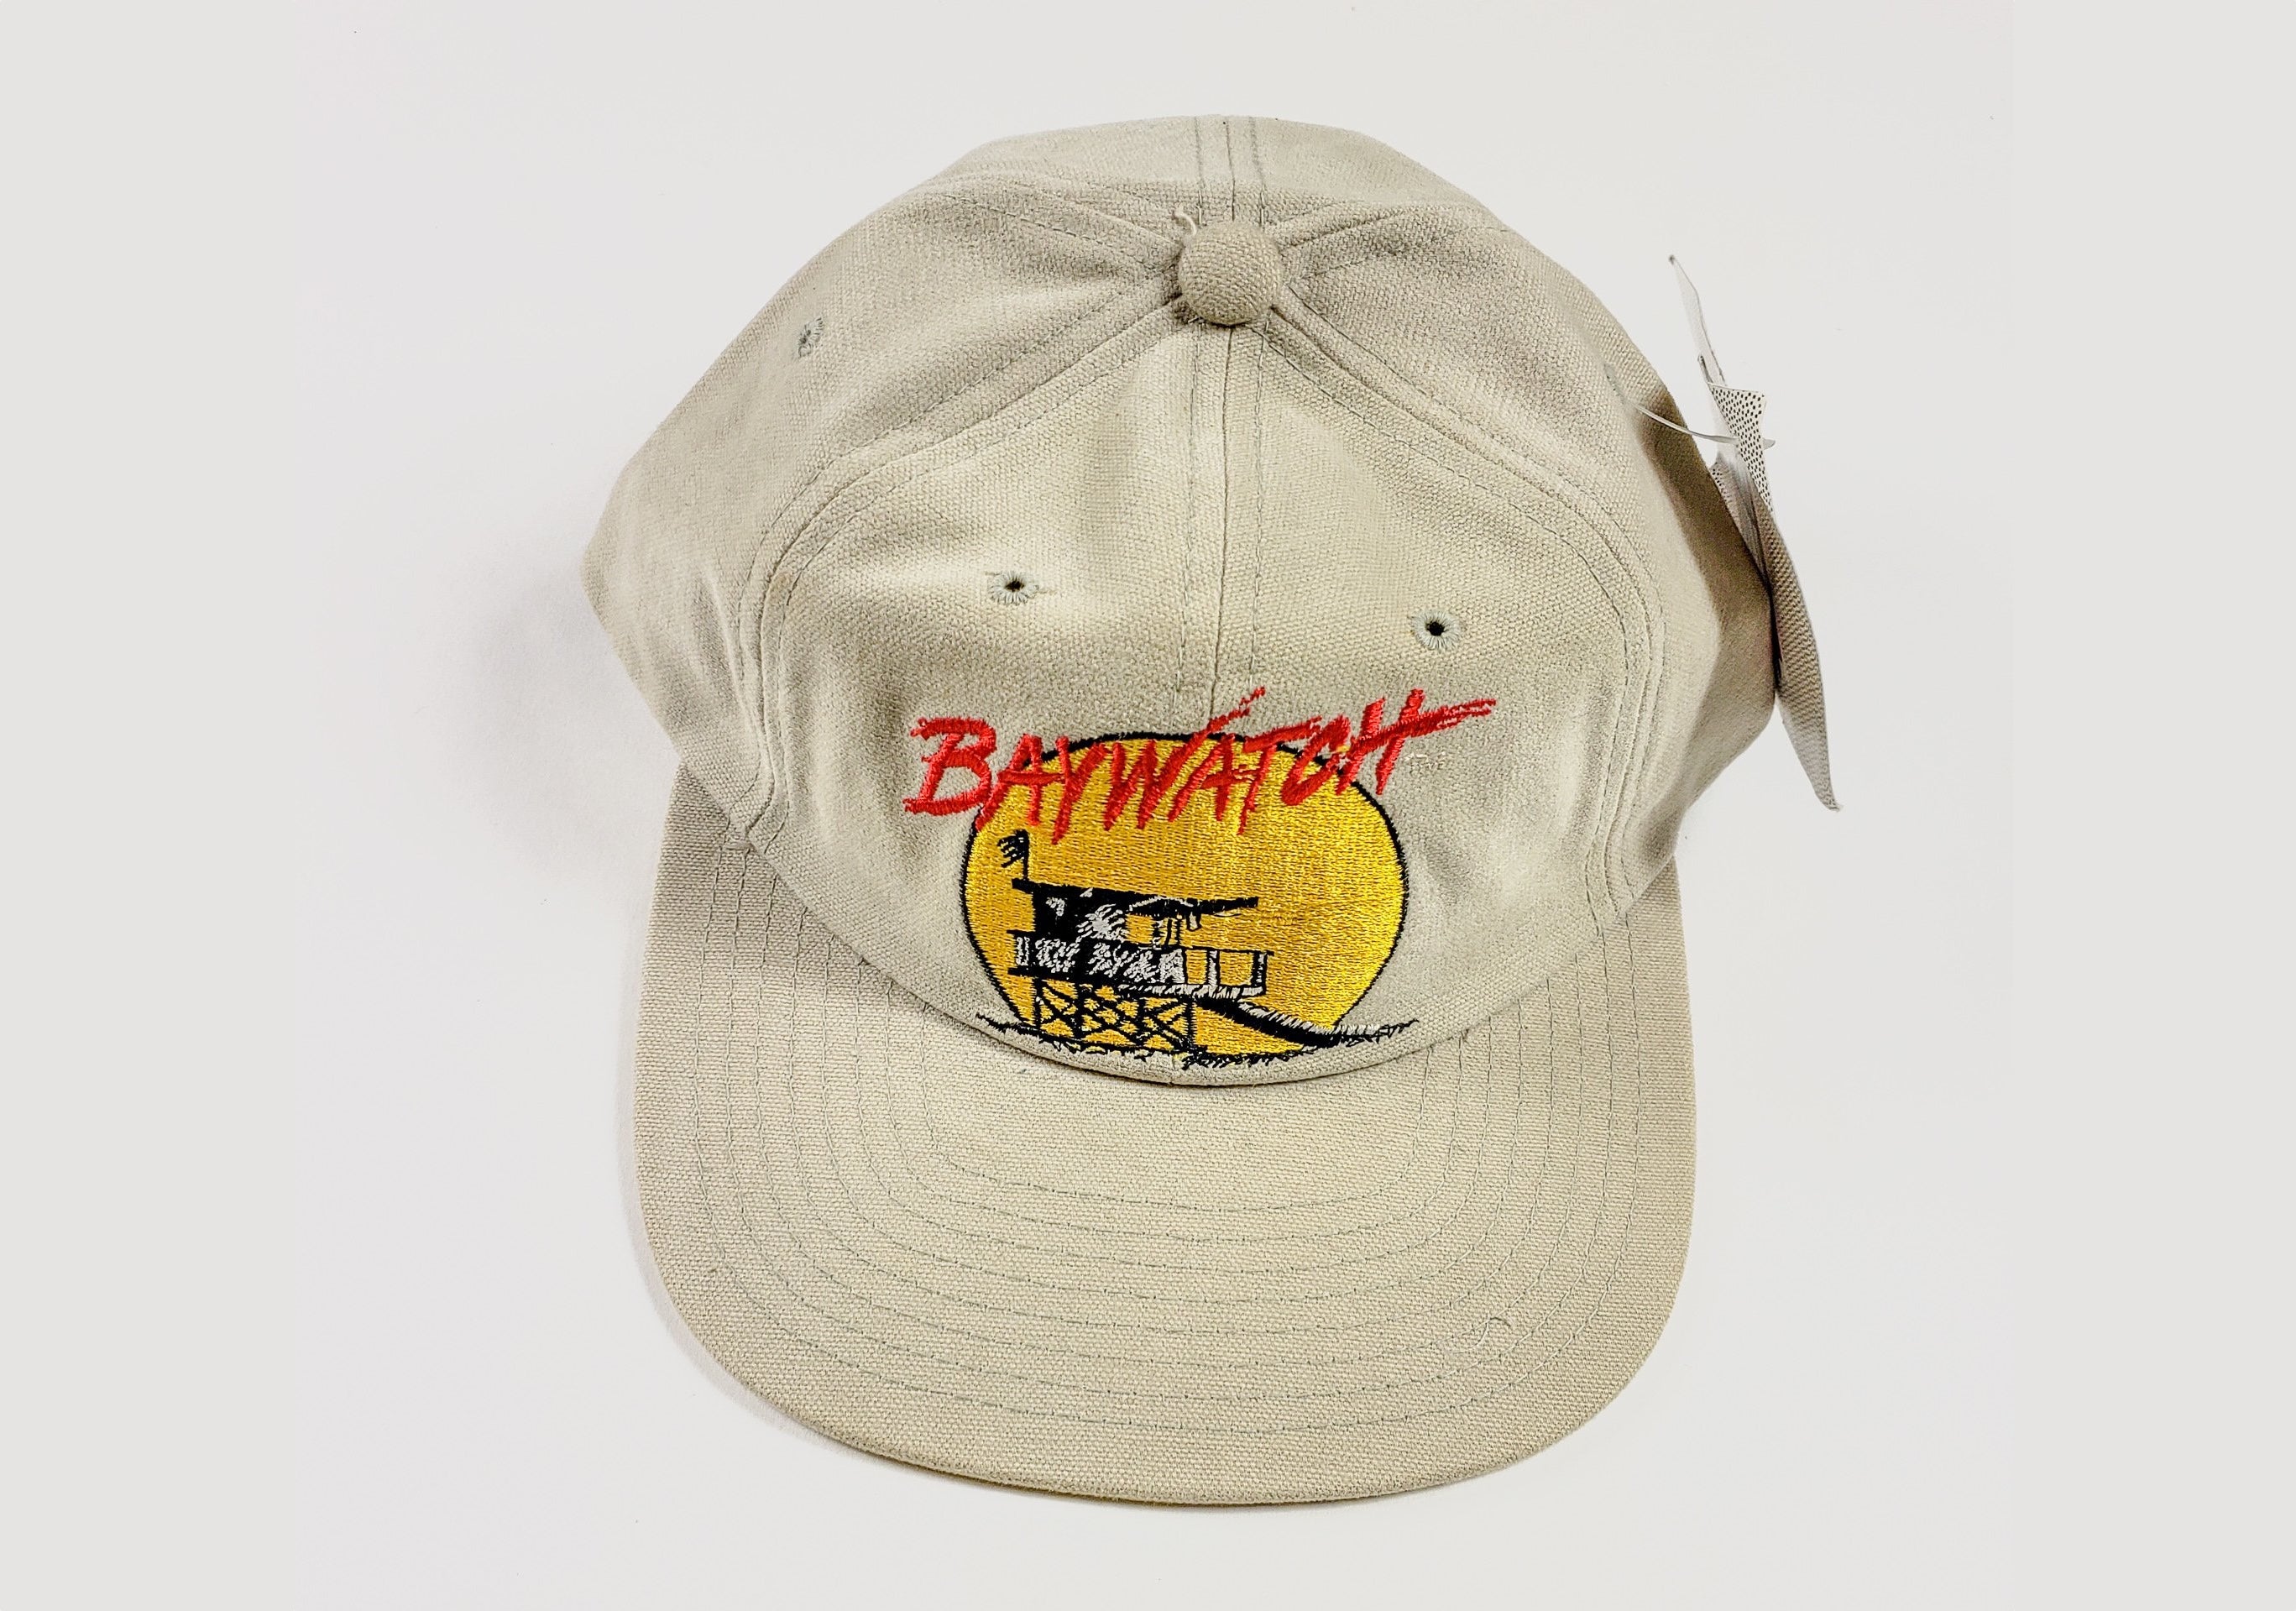 Vintage snapback cream hat with "Baywatch" design